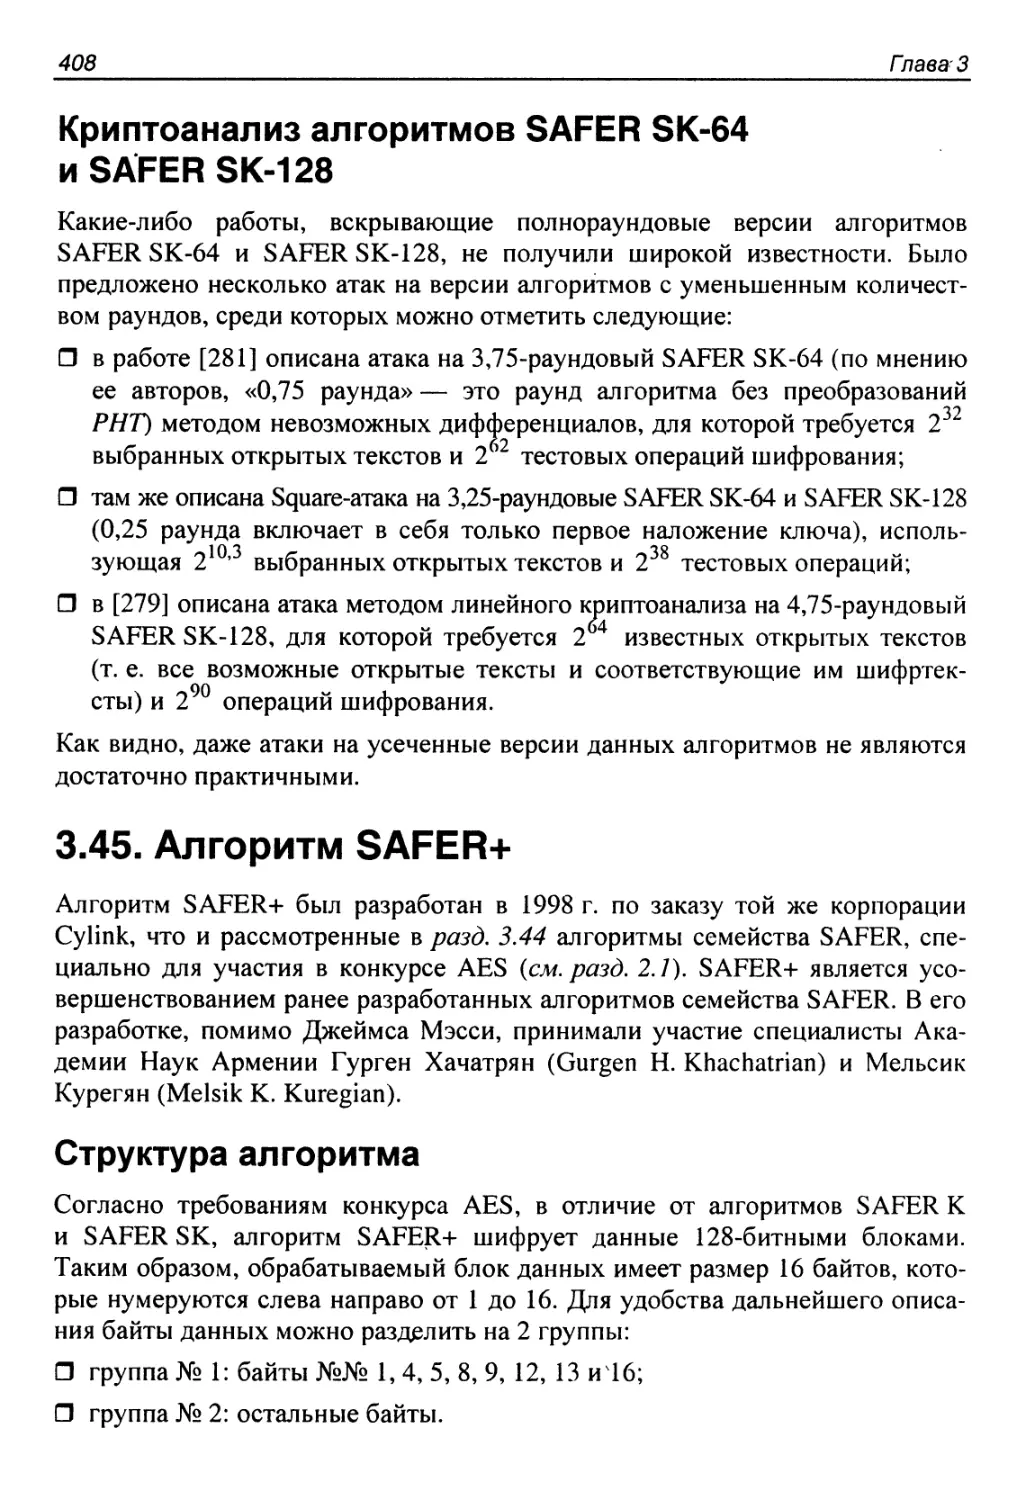 Криптоанализ алгоритмов SAFER SK-64 и SAFER SK-128
3.45. Алгоритм SAFER+